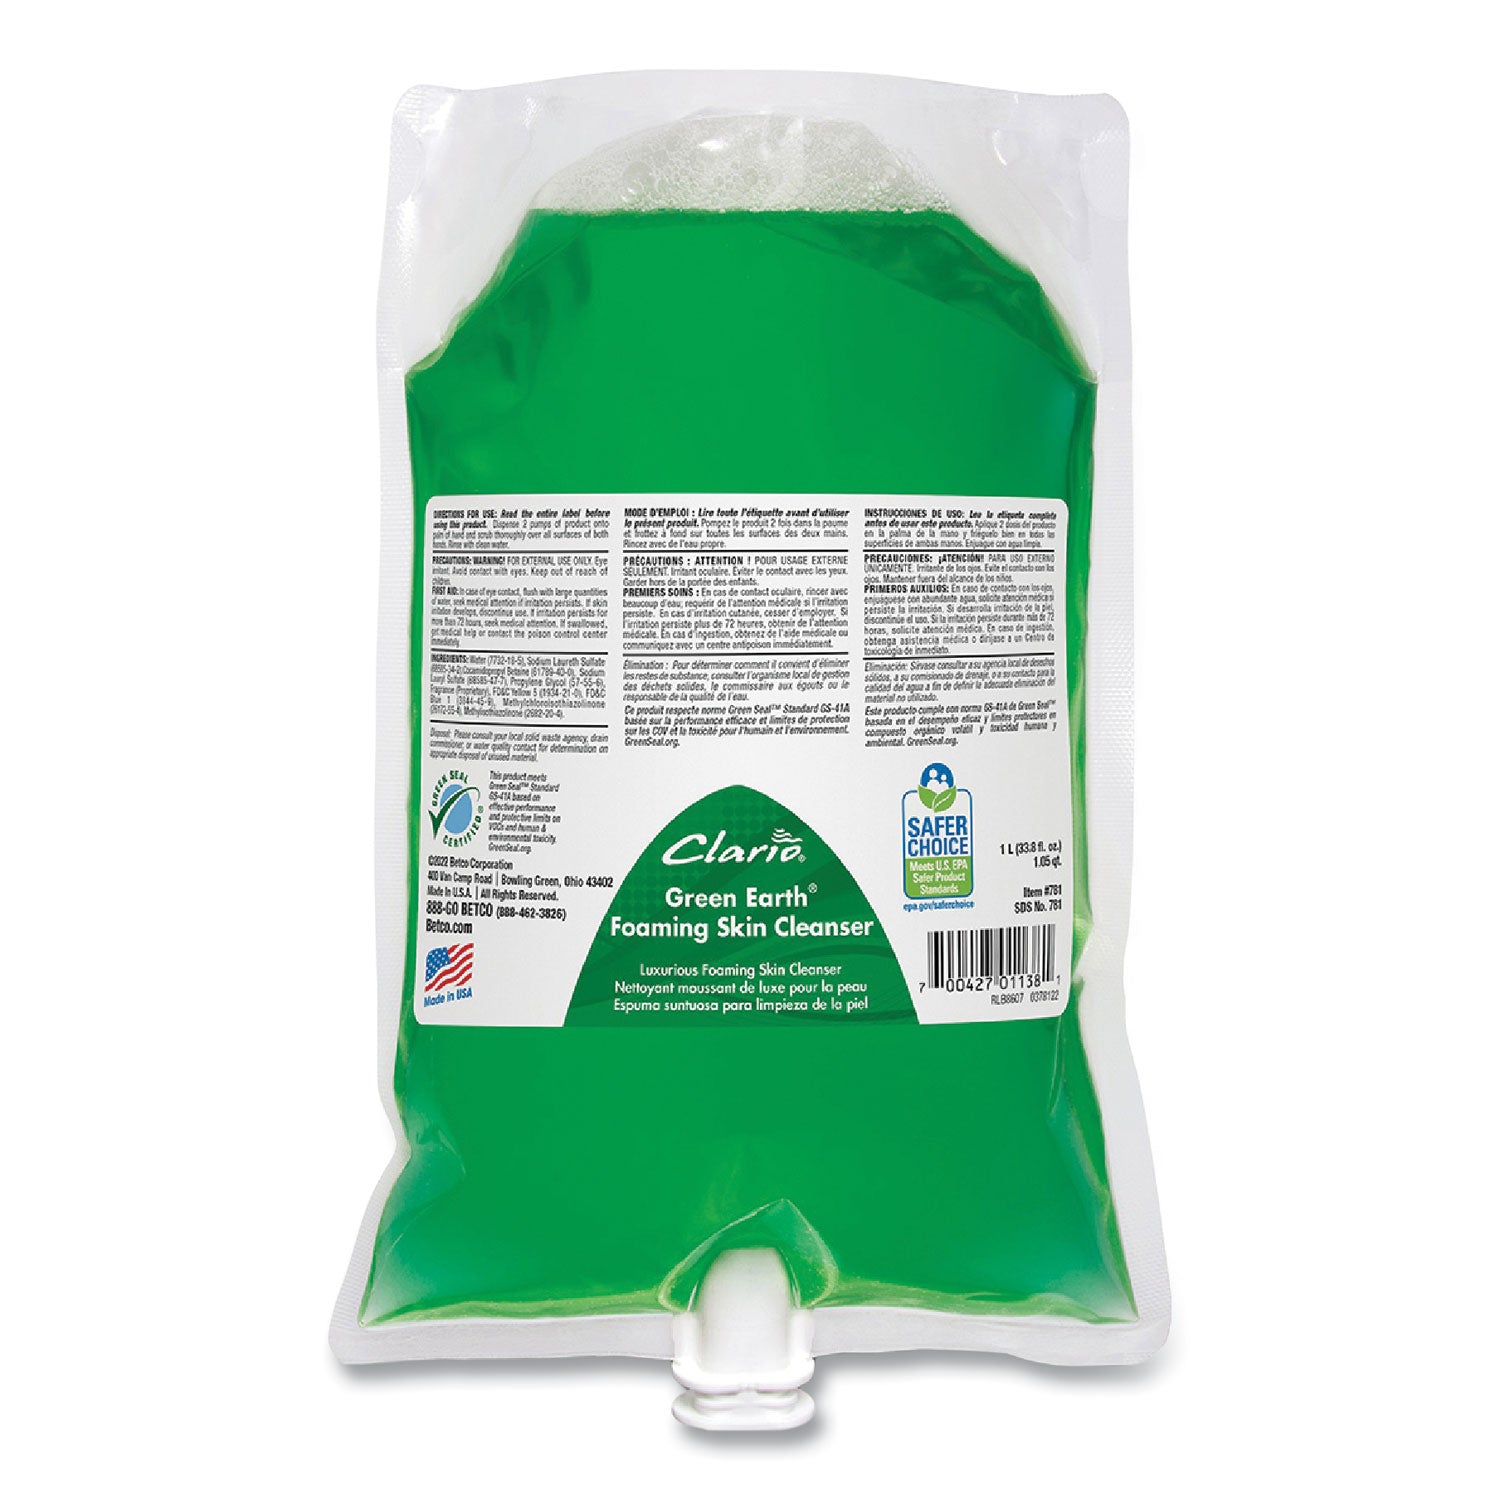 green-earth-foaming-skin-cleanser-refill-fresh-meadow-1000-ml-refill-bag-6-carton_bet7812900 - 1